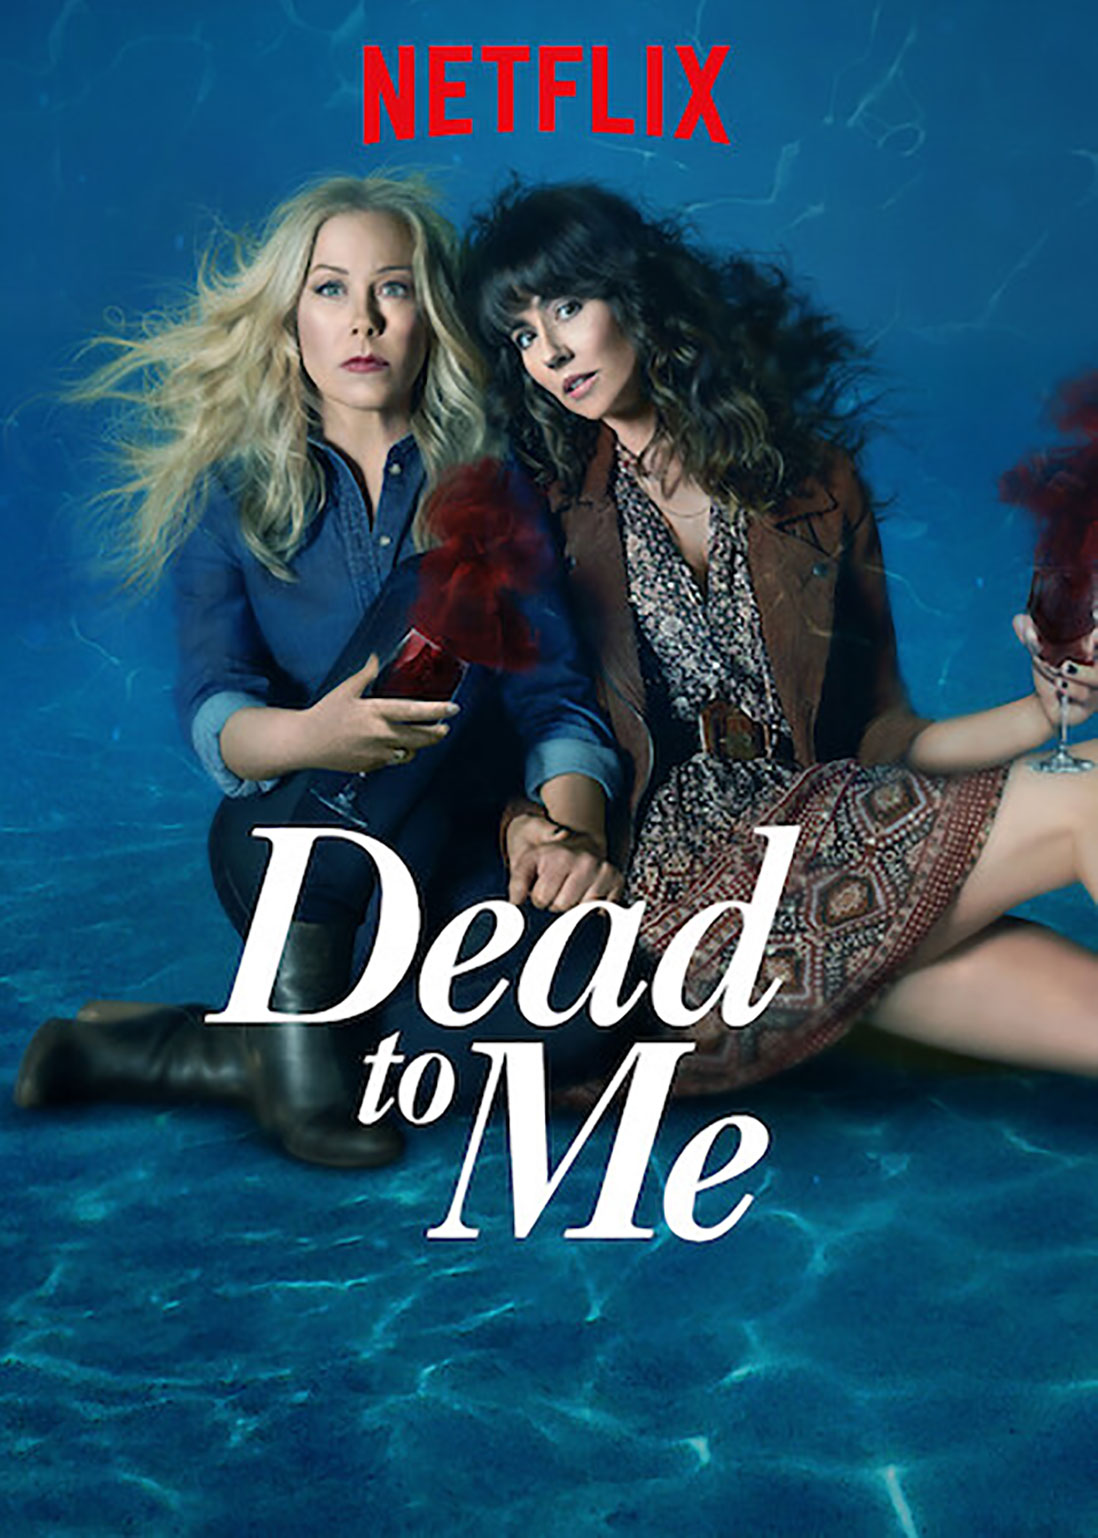 Dead to Me - Full Cast & Crew - TV Guide